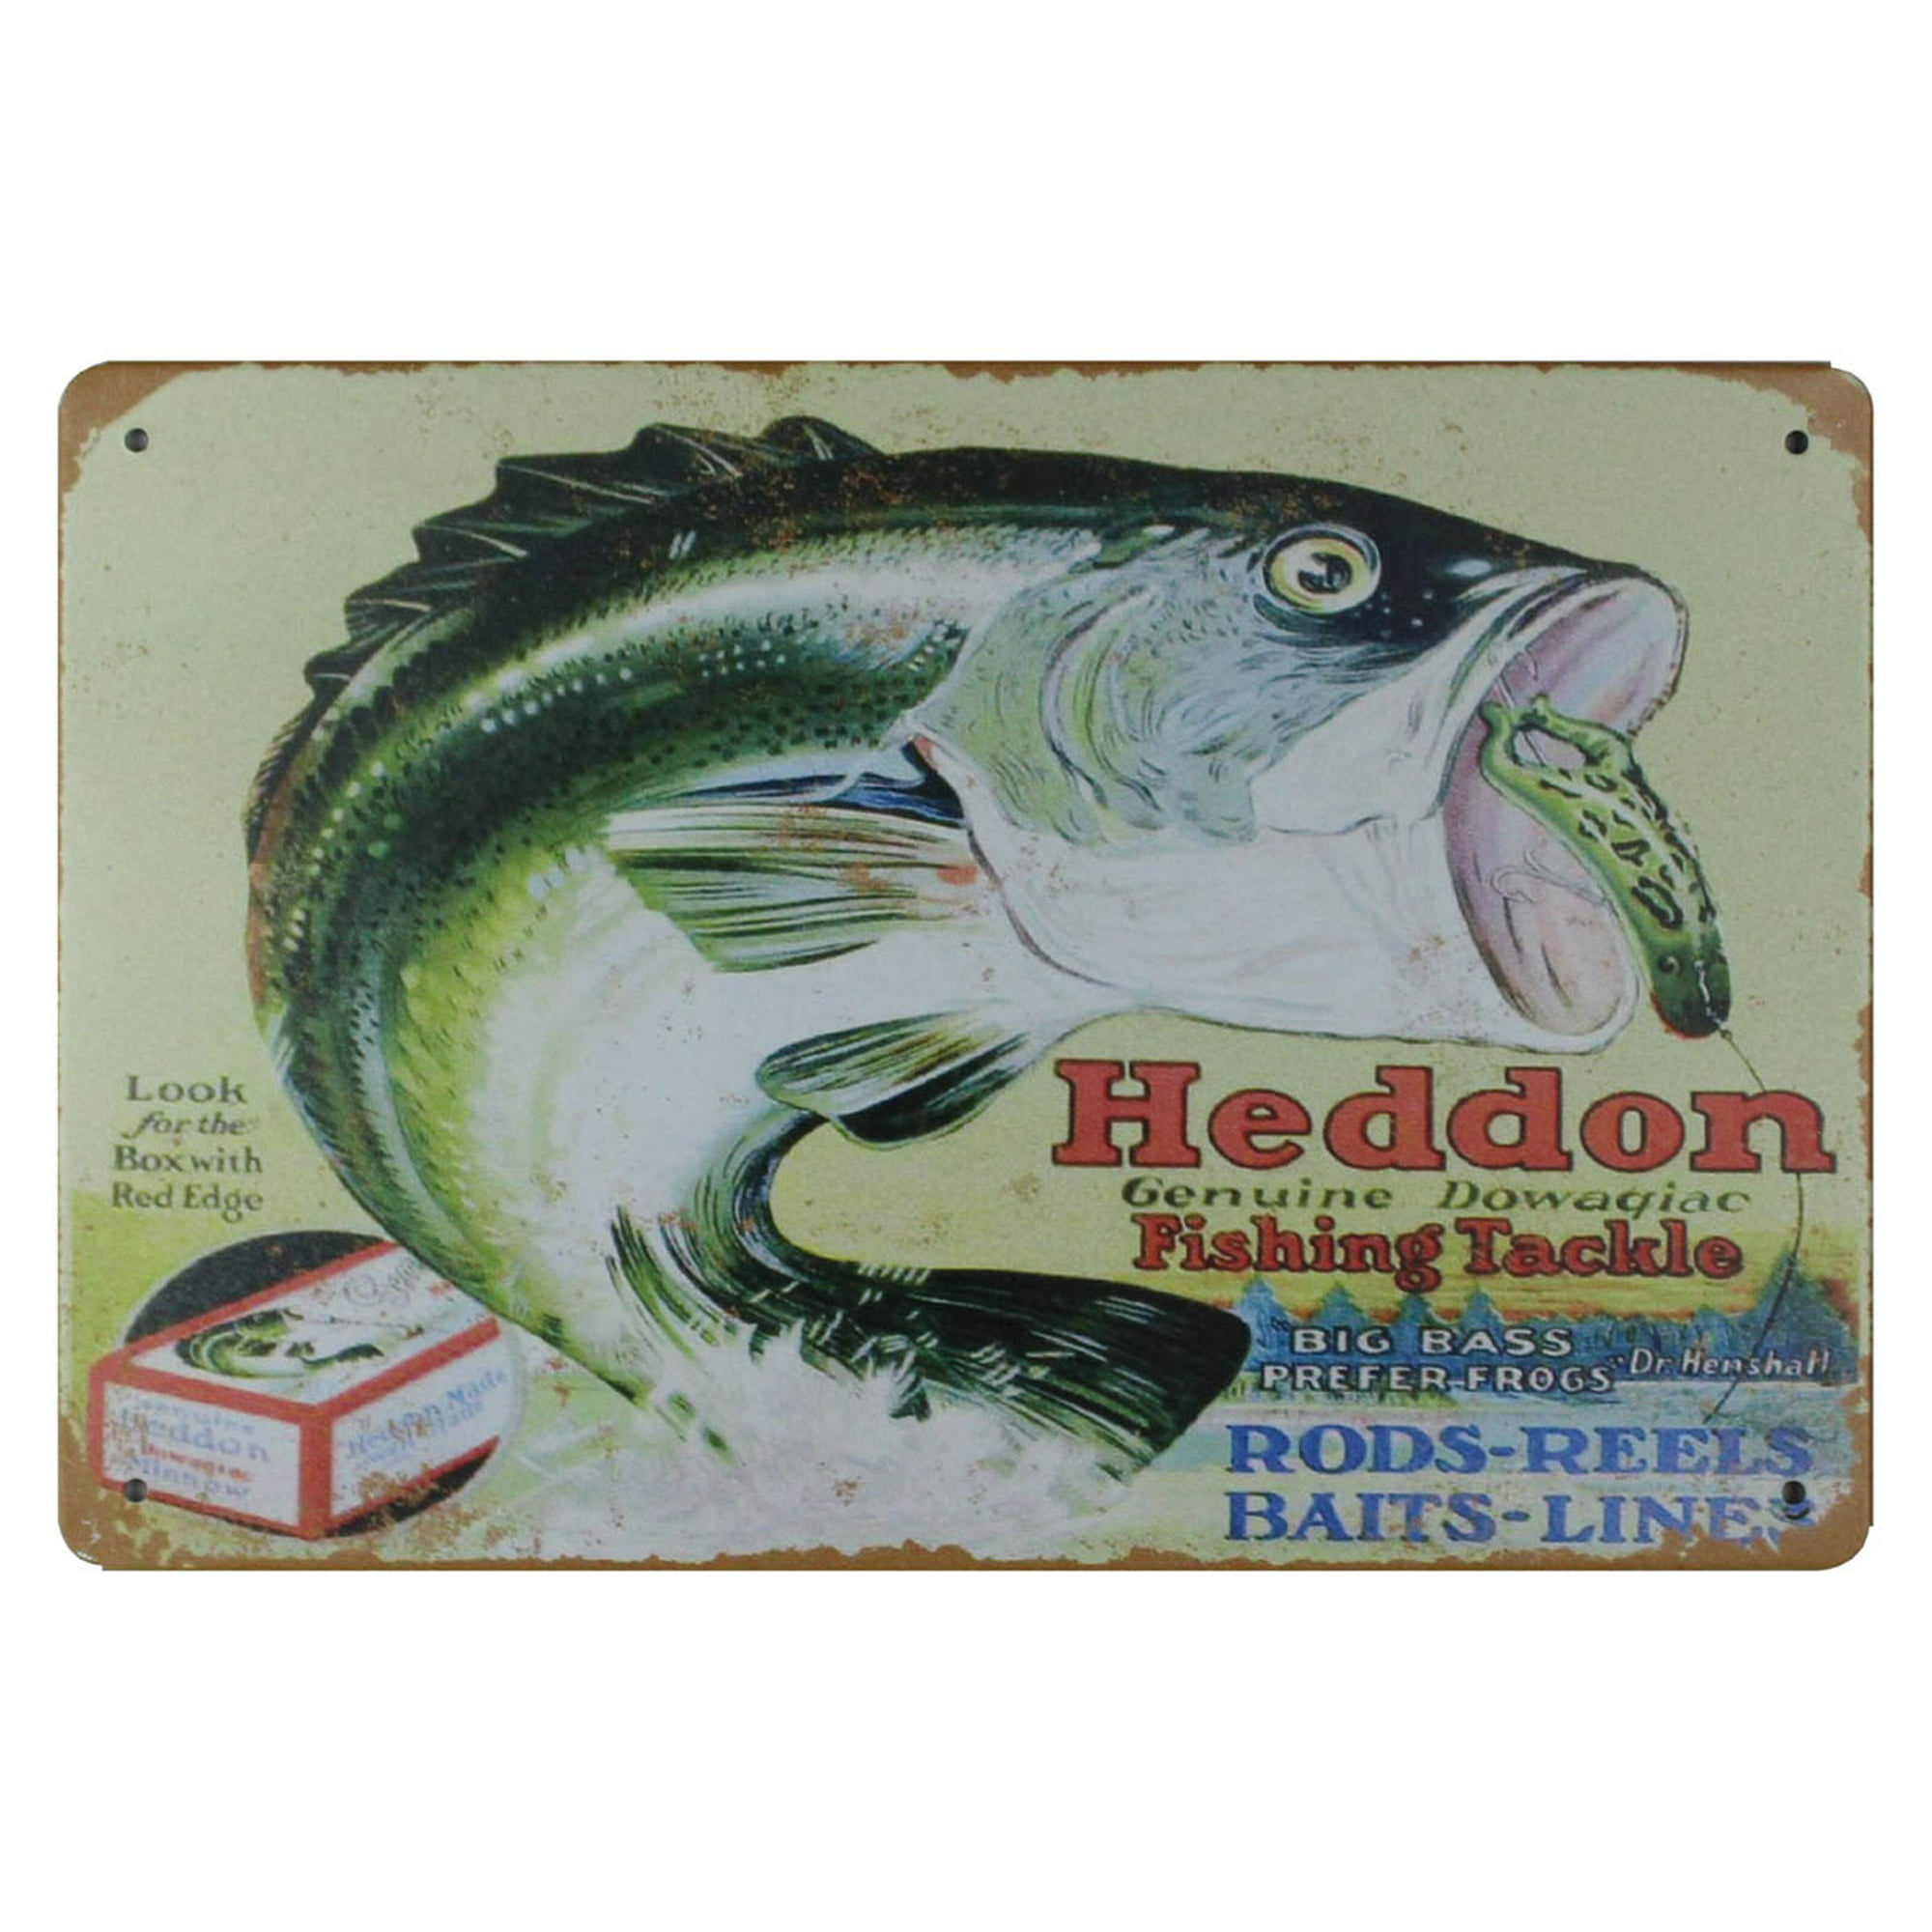 Vintage Heddon fishing tackle ad reproduction metal sign fishing decor